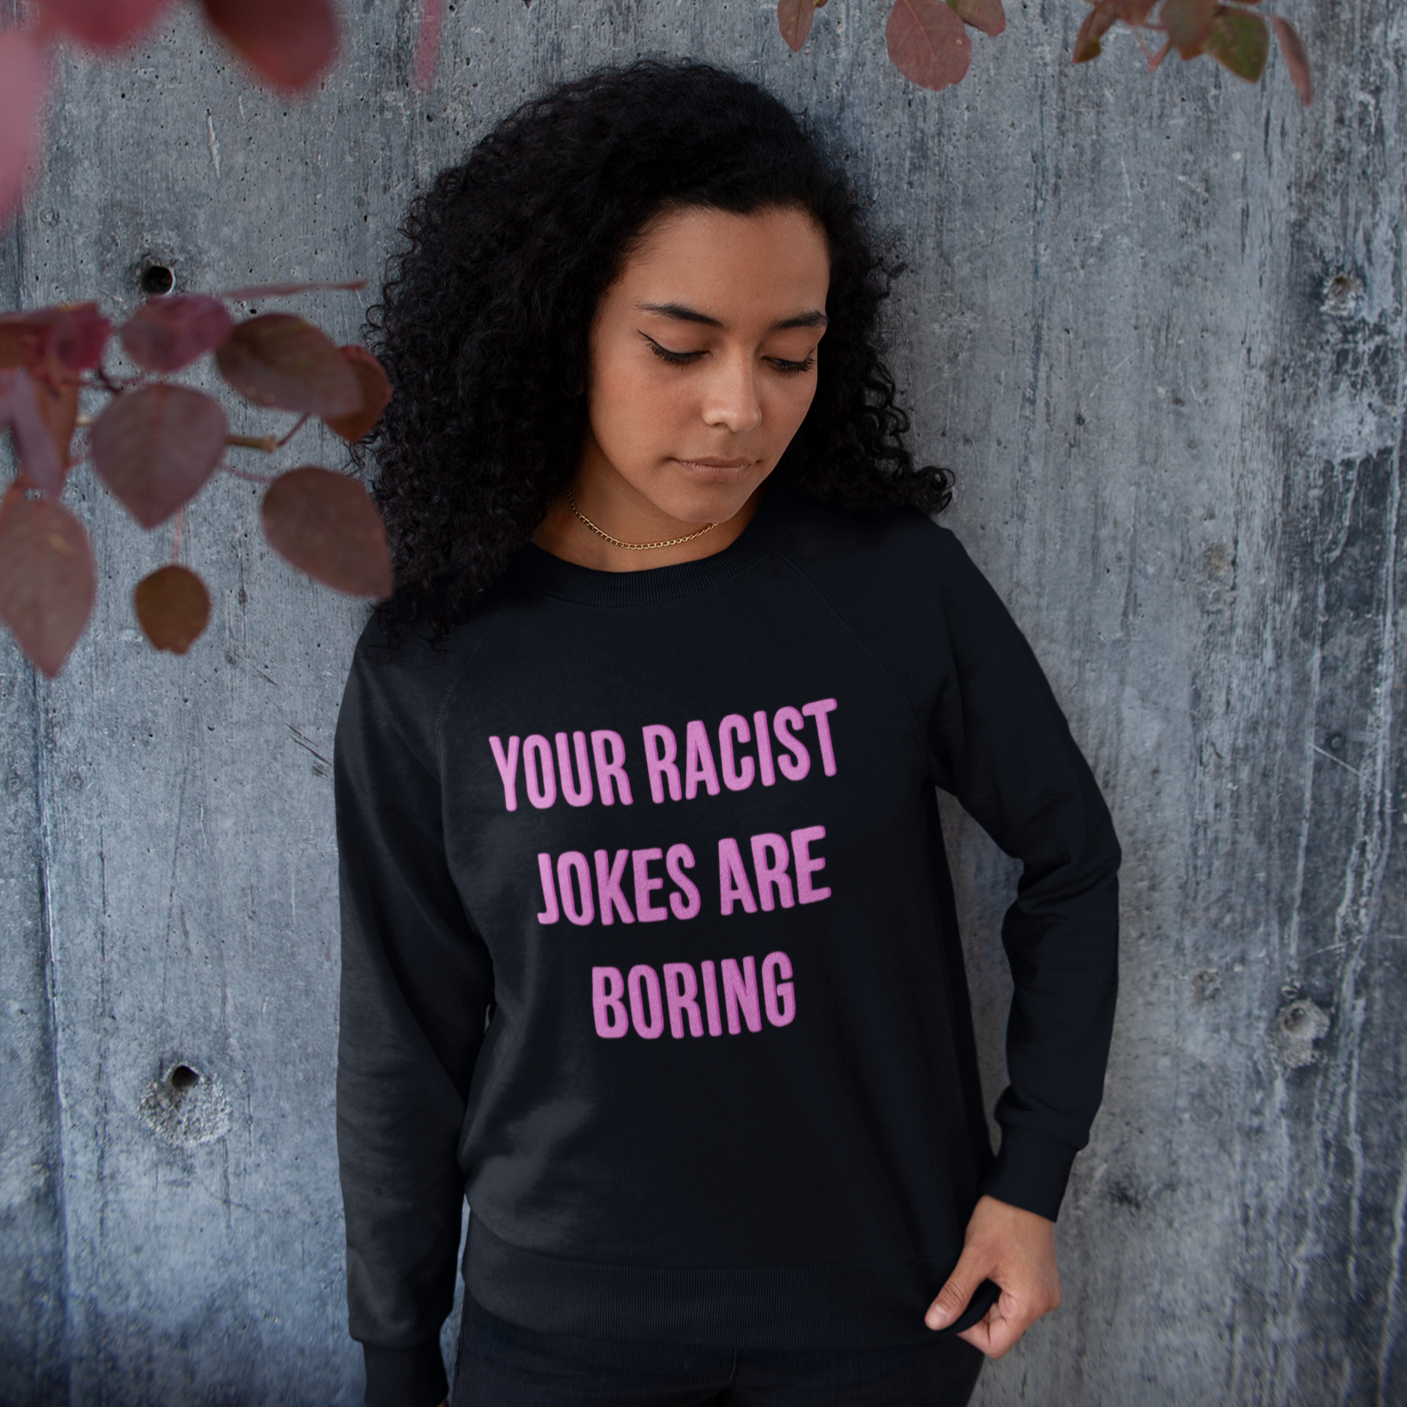 Your Racist Jokes Are Boring Unisex Feminist Sweatshirt - Feminist Trash Store - Shop Women’s Rights T-shirts 